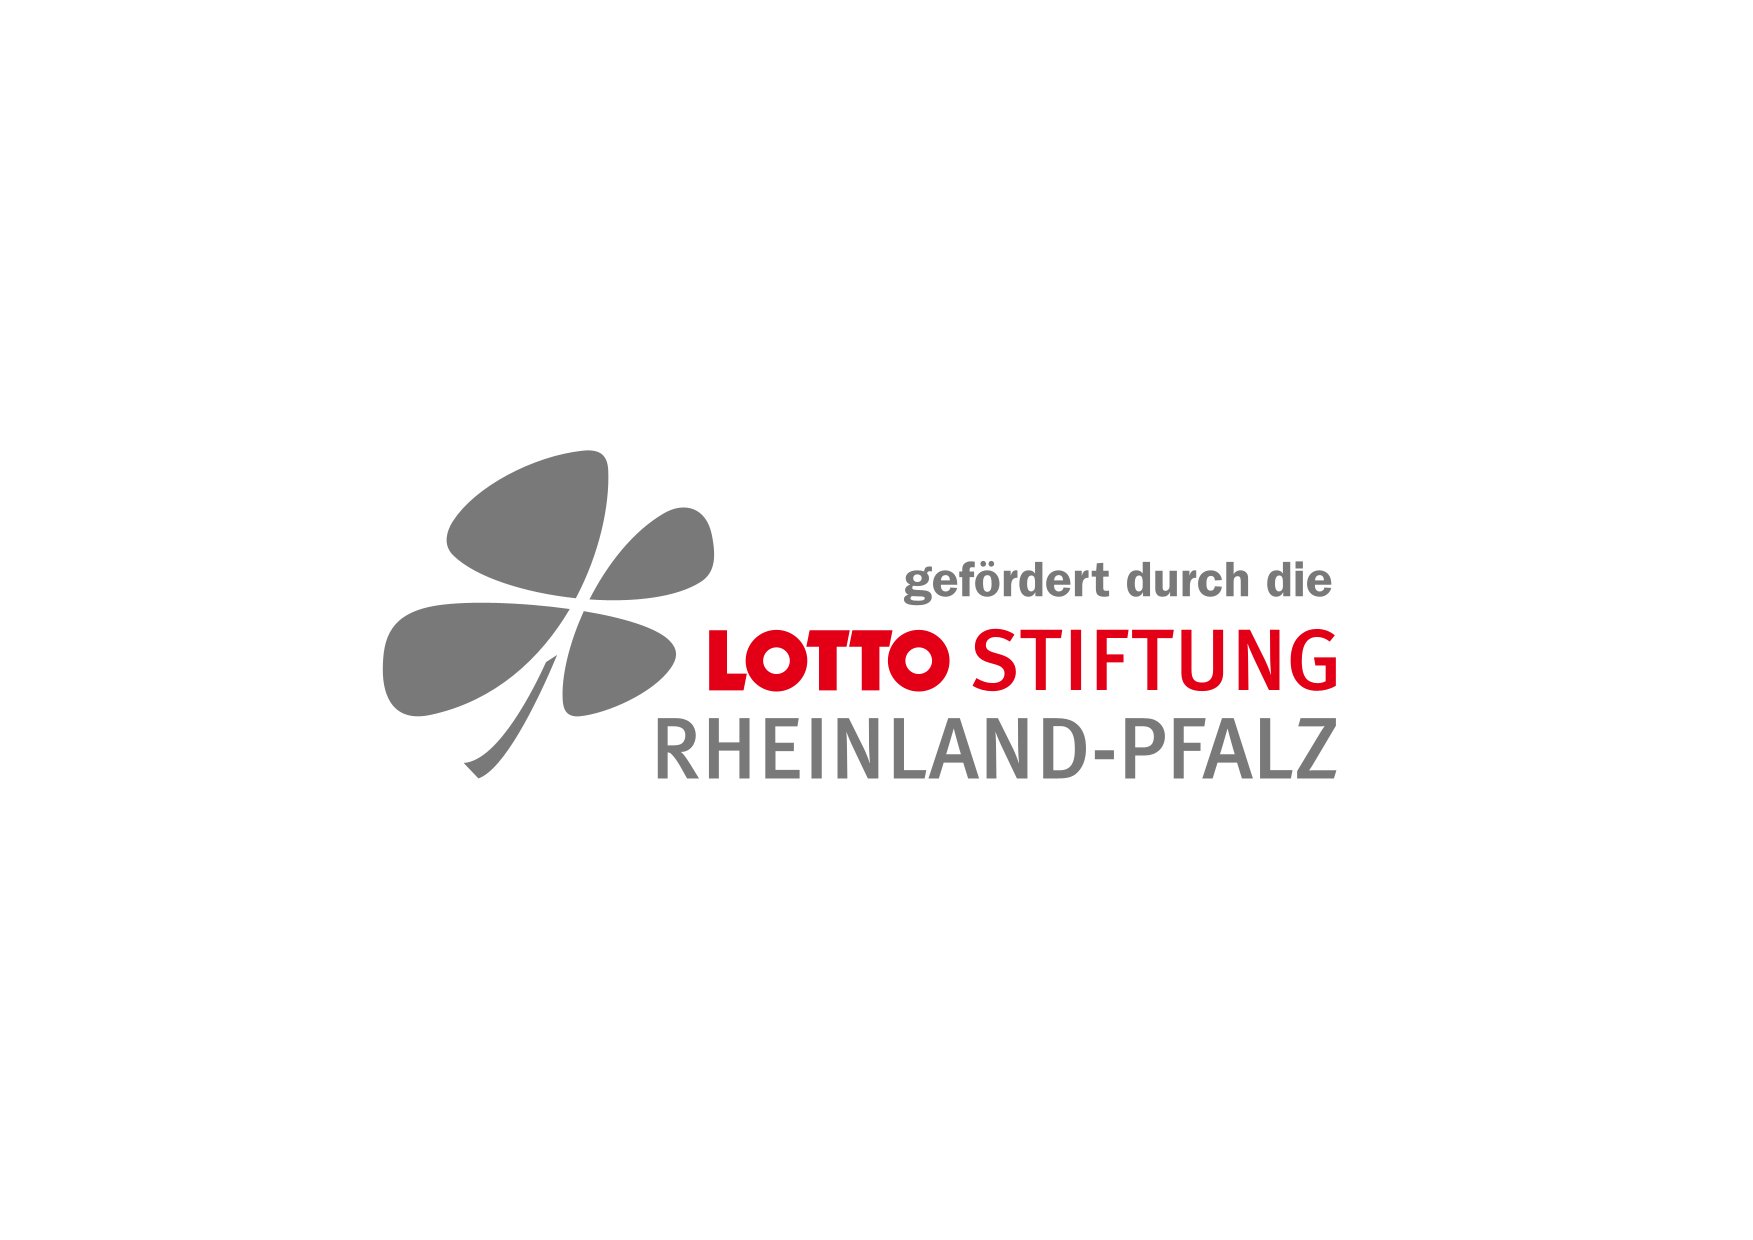 Lotto Stiftung